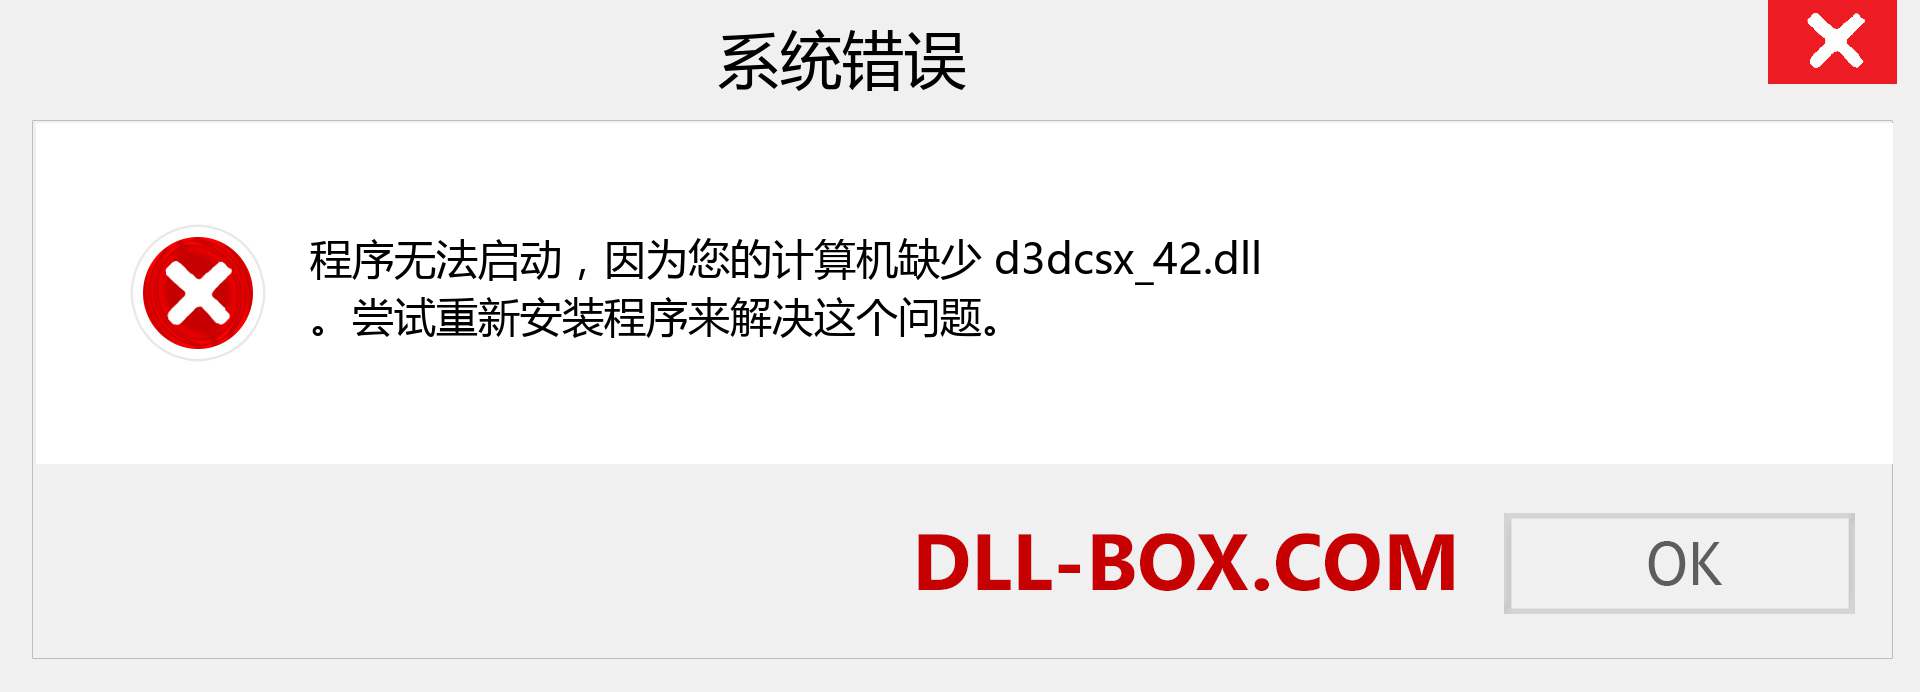 d3dcsx_42.dll 文件丢失？。 适用于 Windows 7、8、10 的下载 - 修复 Windows、照片、图像上的 d3dcsx_42 dll 丢失错误